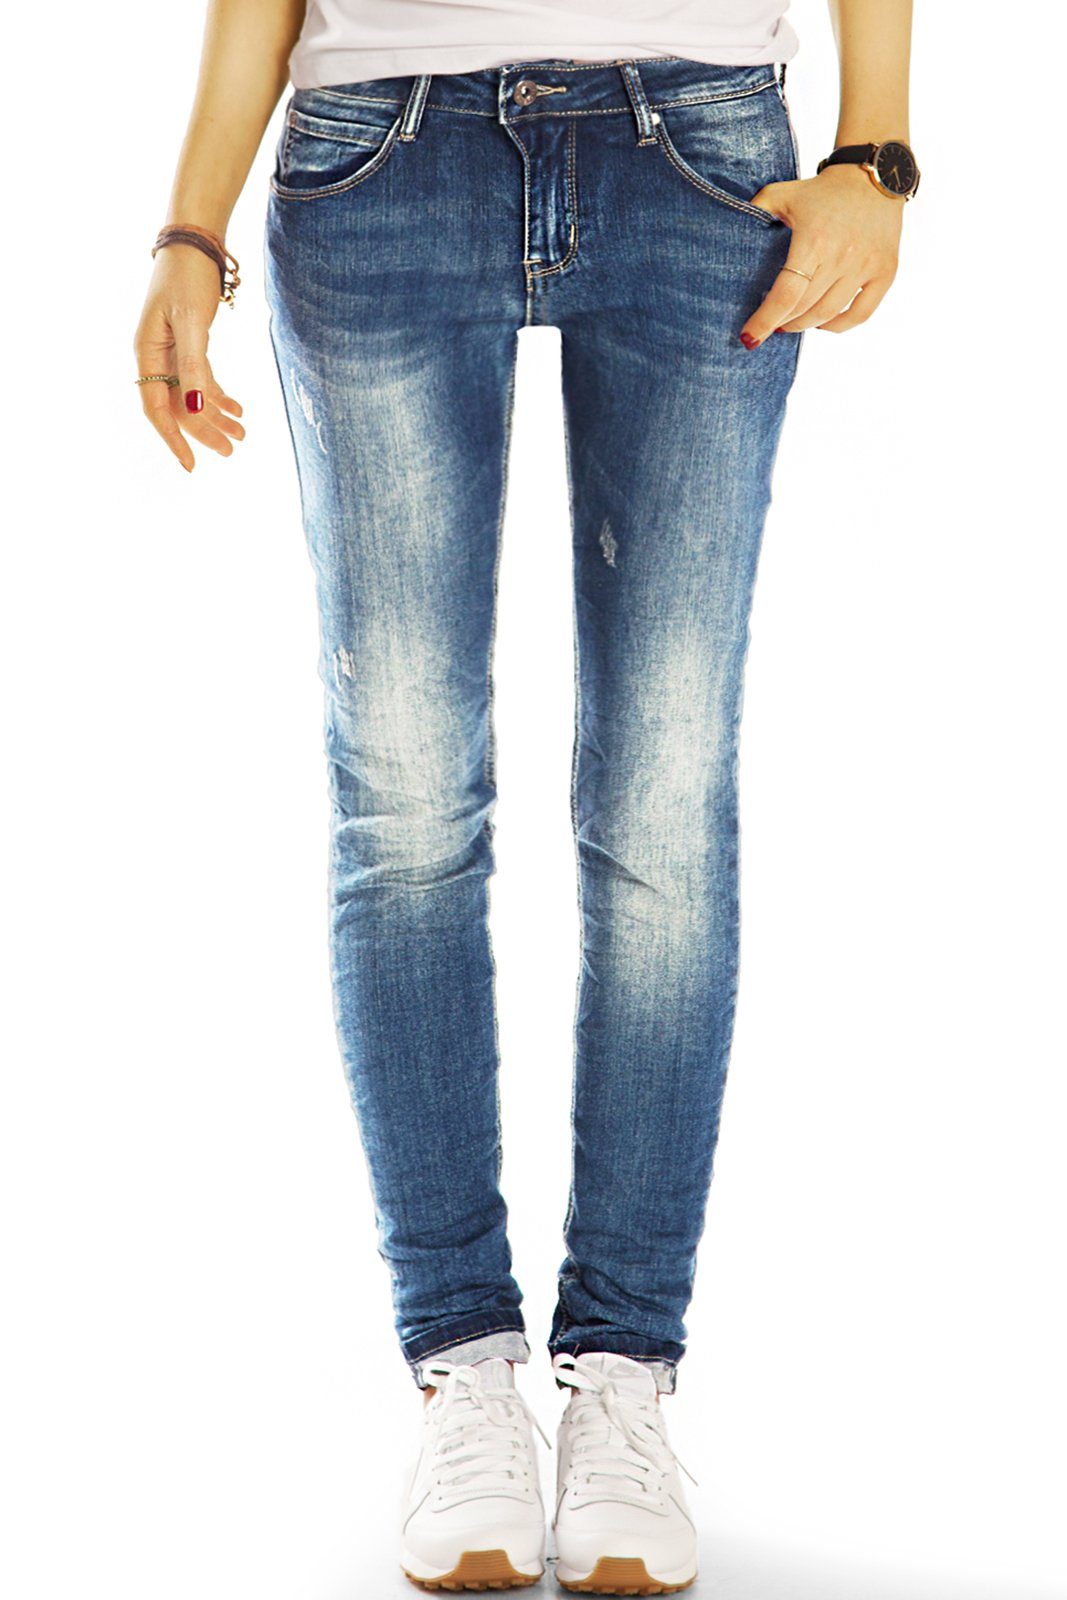 [Beliebte Verkäufe] be styled Low-rise-Jeans Damenjeans Röhrenjeans destroyed geschnittene destroyed j4m 5-pocket, niedrig